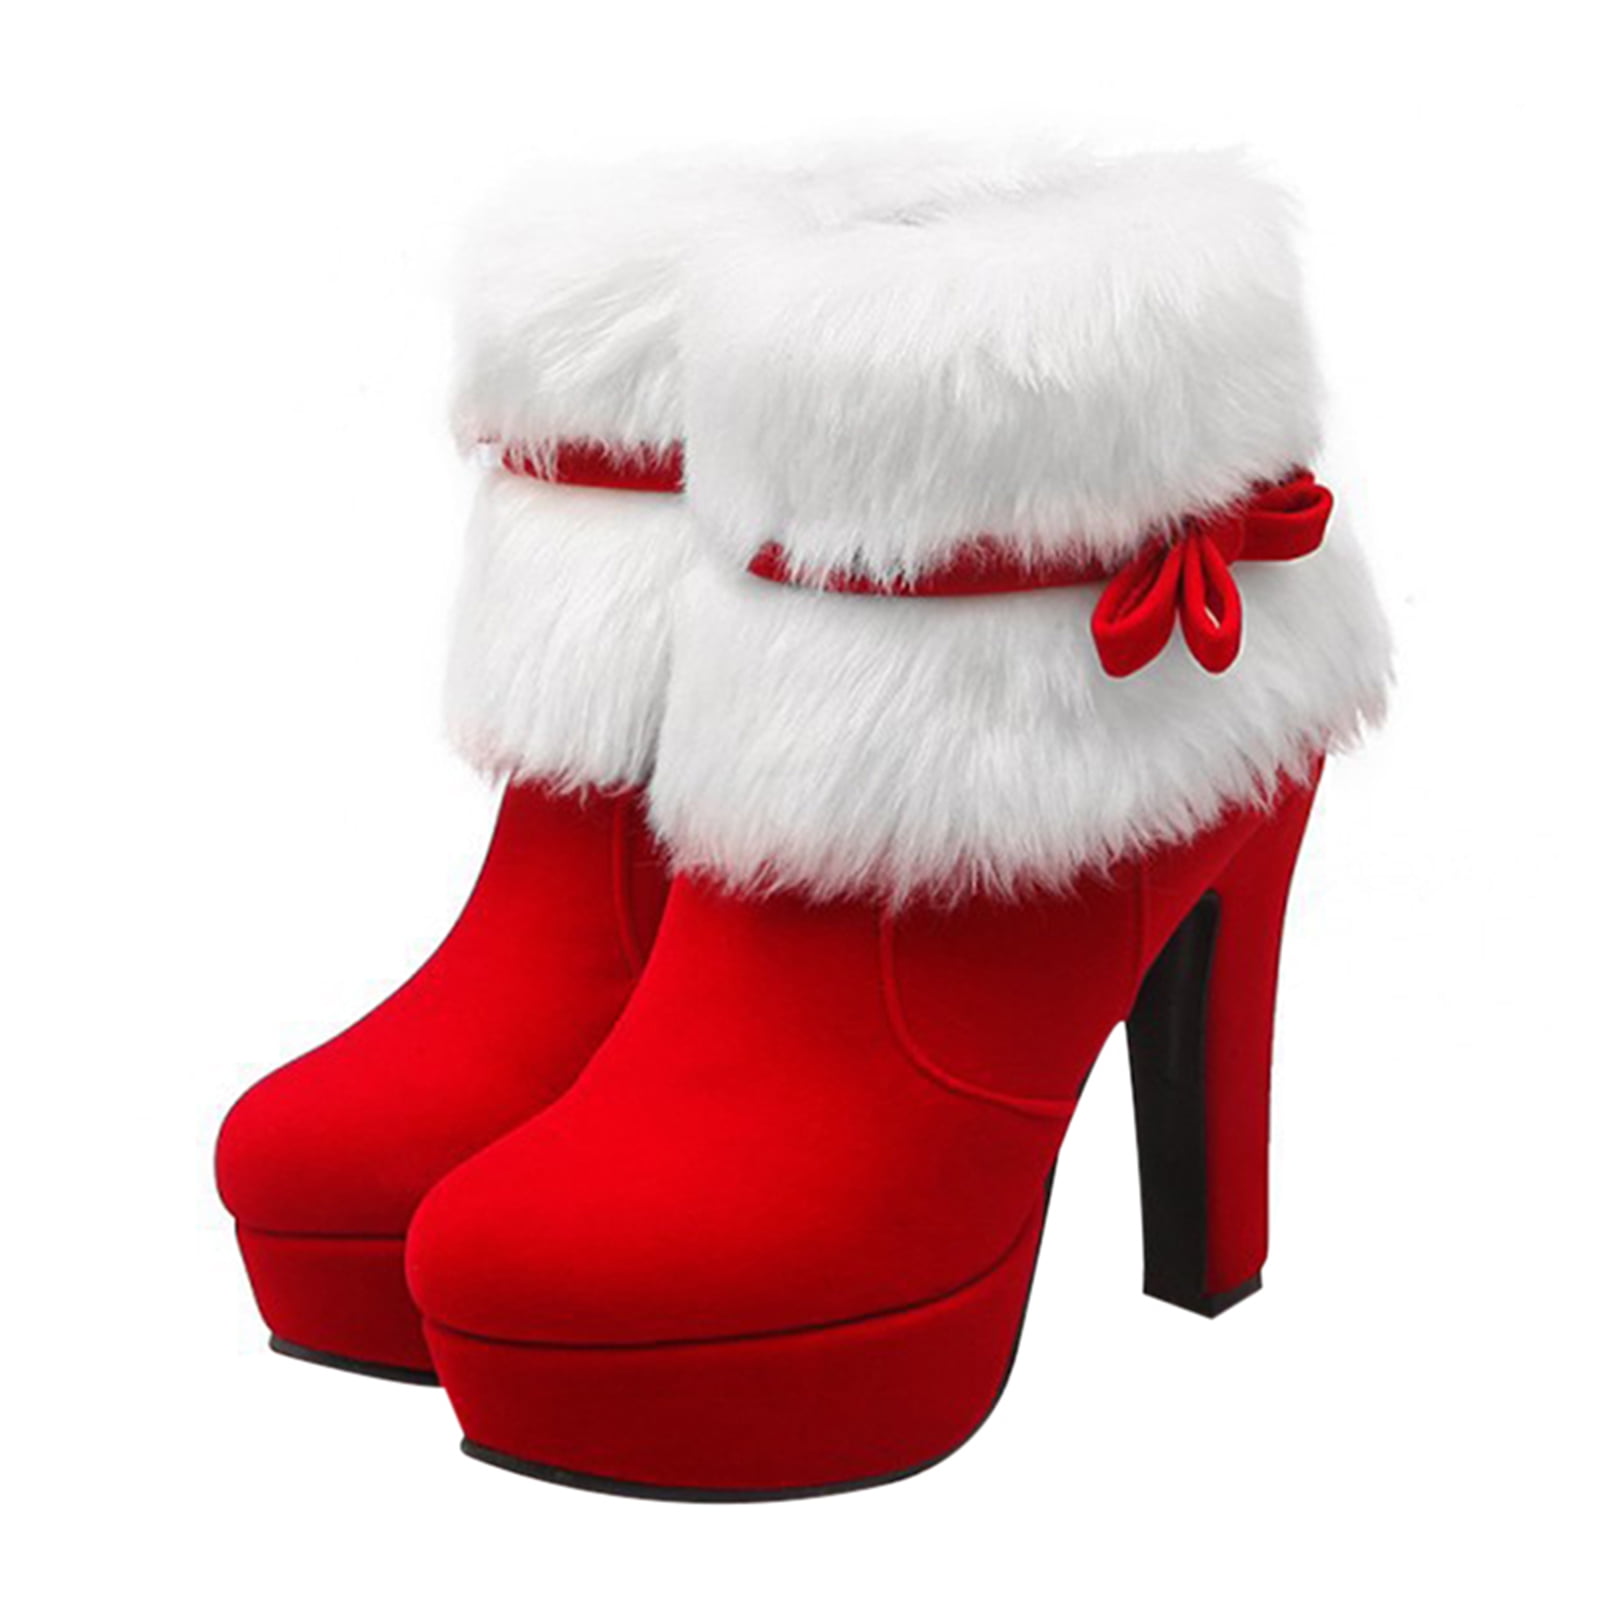 Festive Heels Christmas Winter Suede High Heeled Boots Platform Short Plush Bow Side Zipper